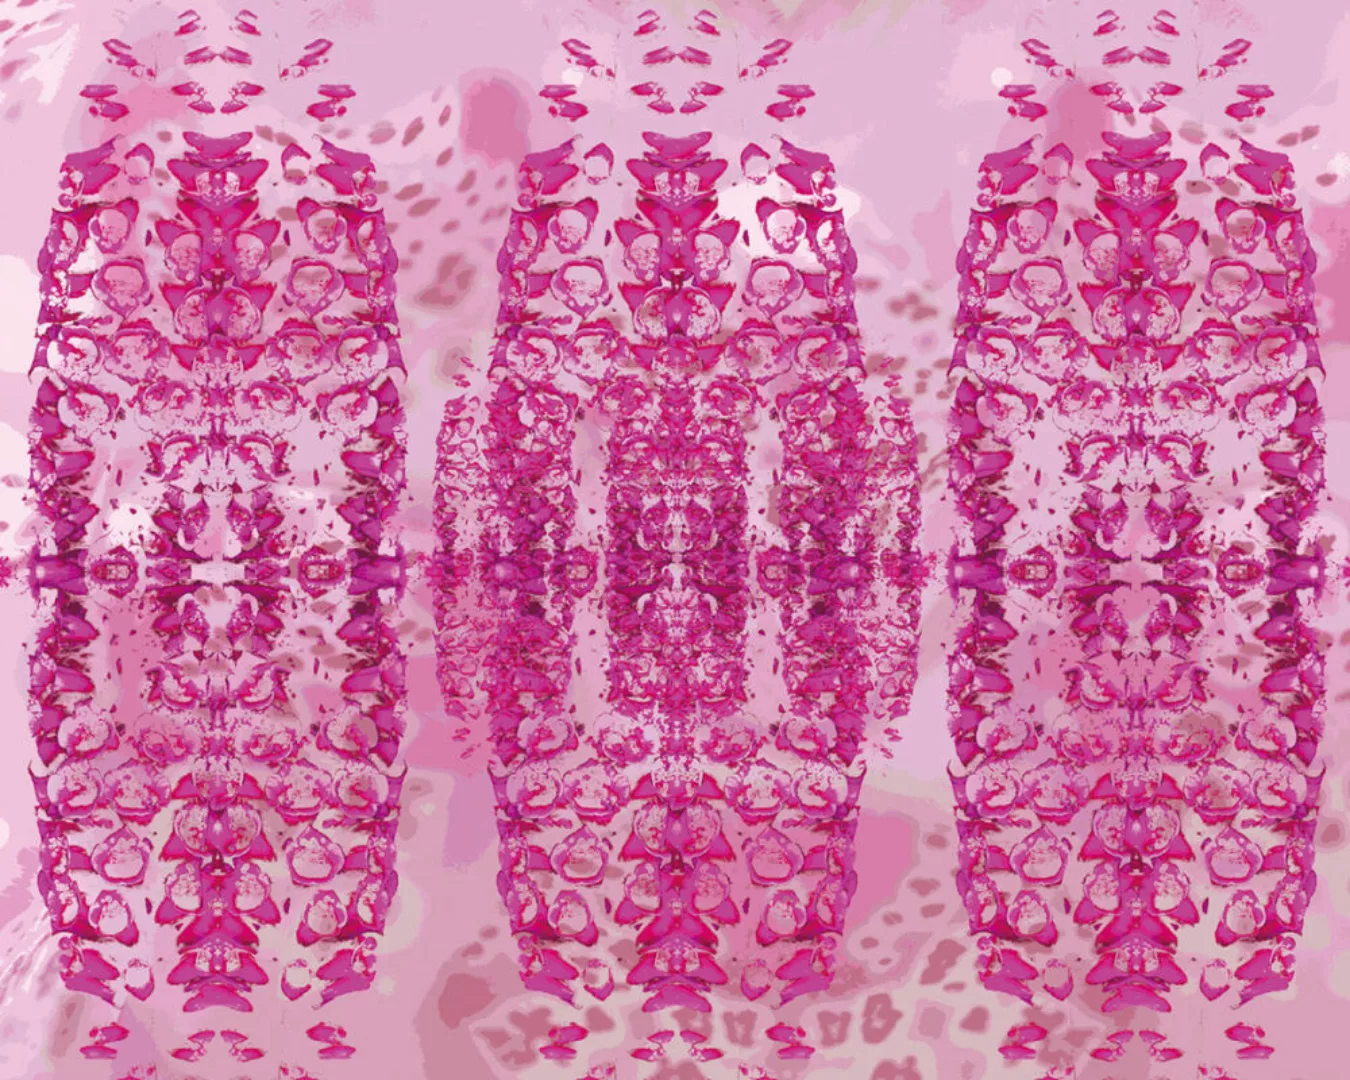 Fototapete "Rosa Ornamente" 4,00x2,50 m / Glattvlies Perlmutt günstig online kaufen